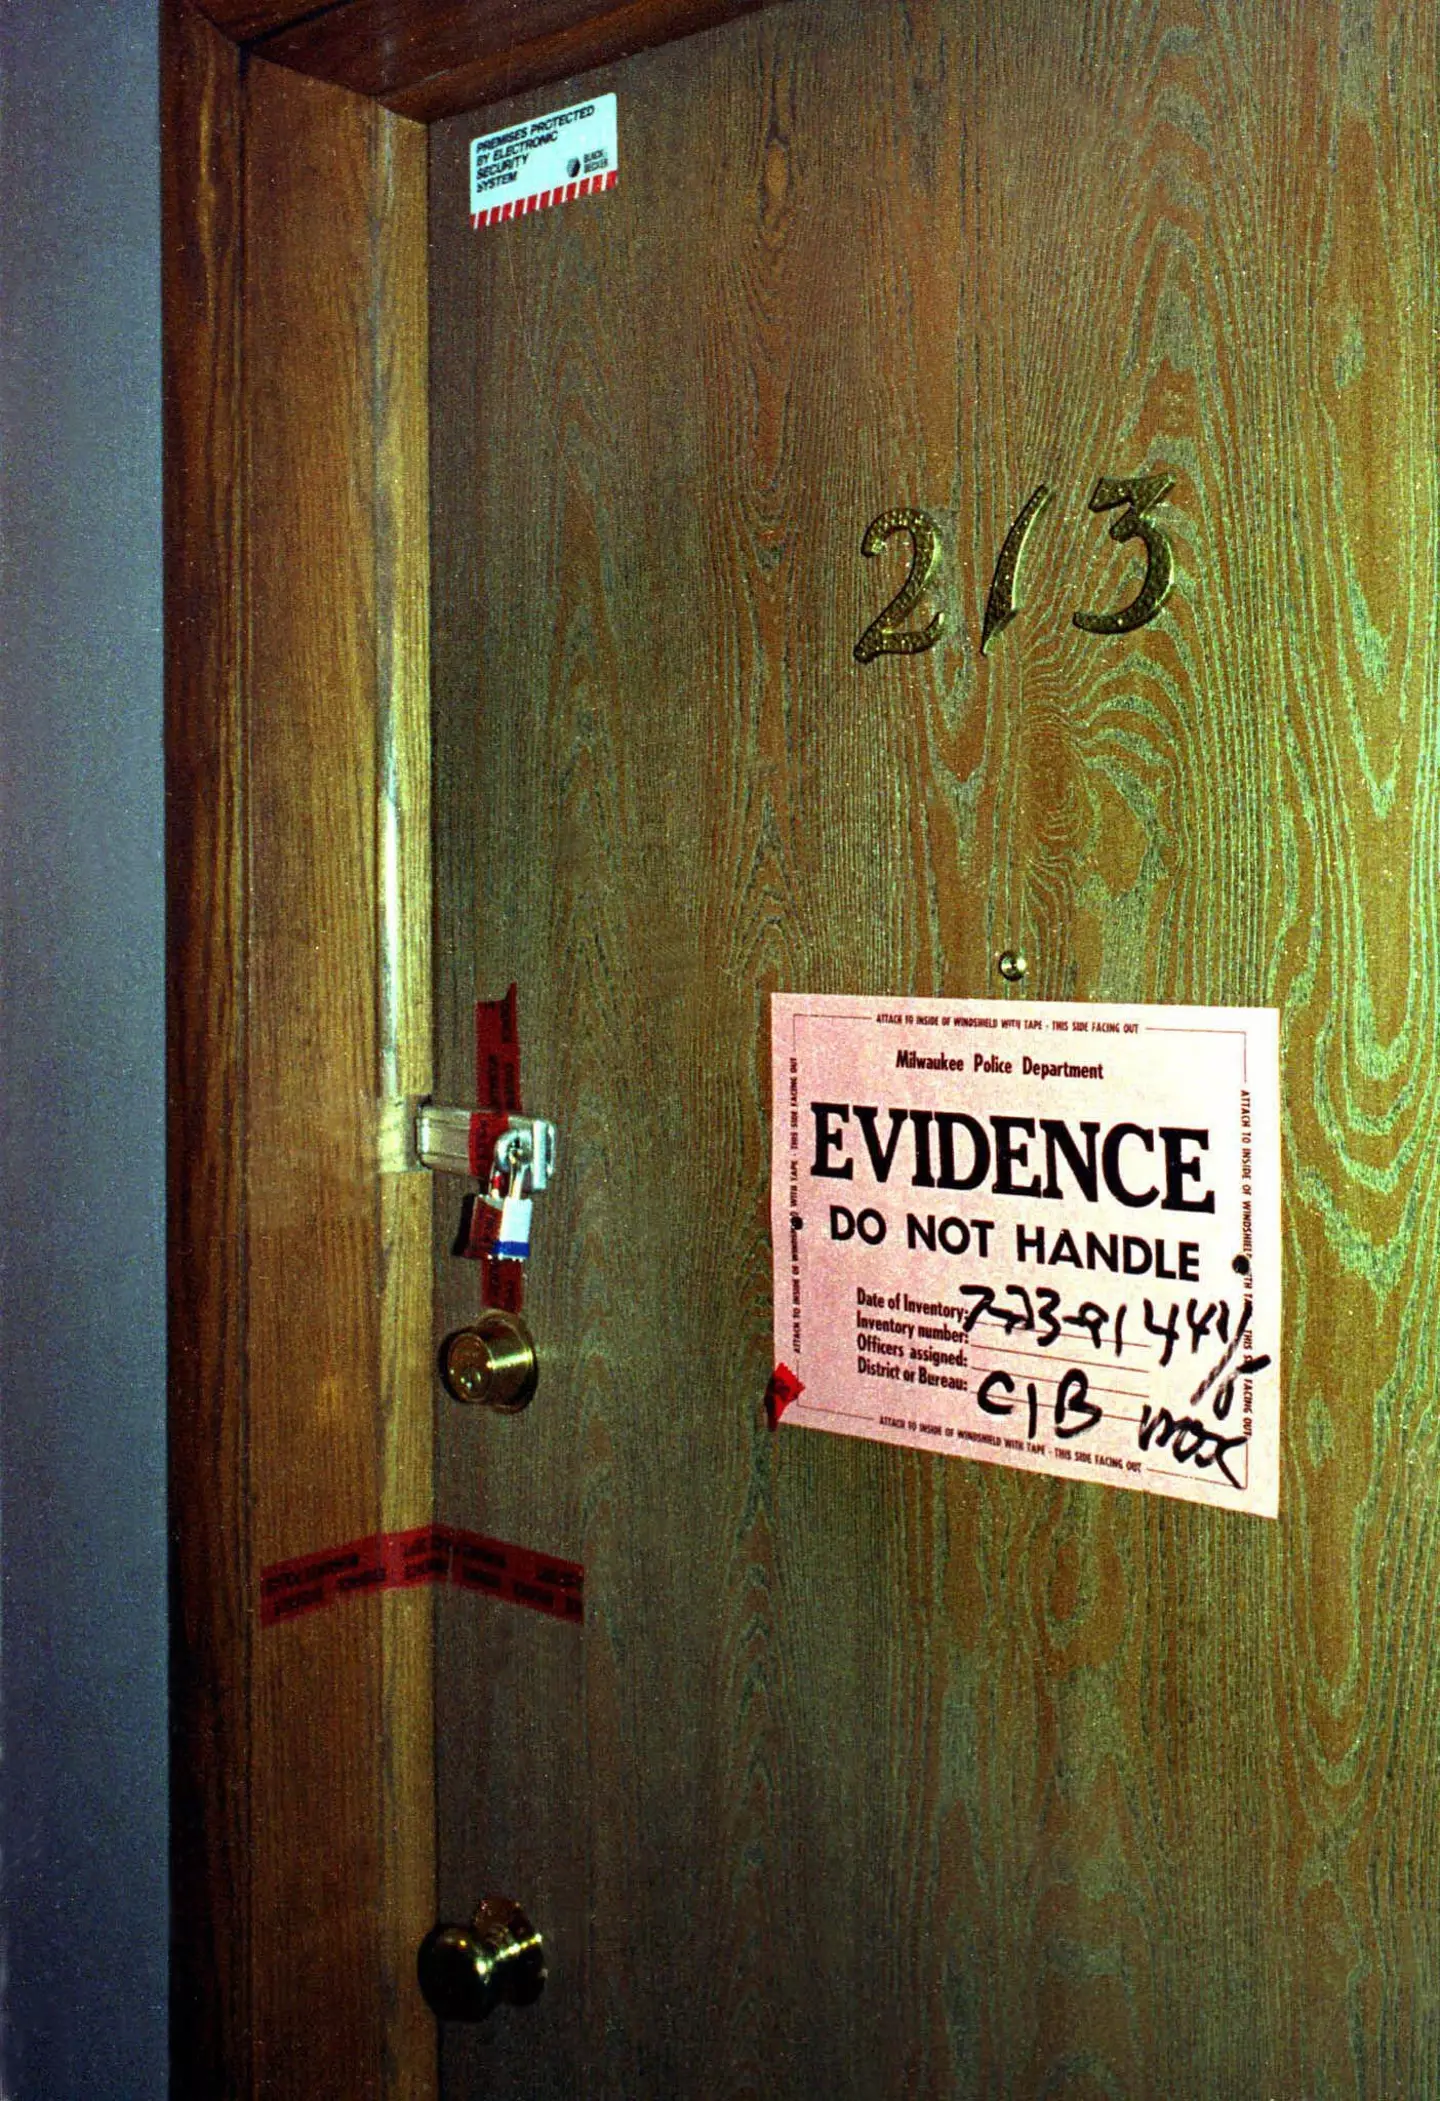 Tracy Edwards claimed Jeffrey Dahmer had several locks on his door.